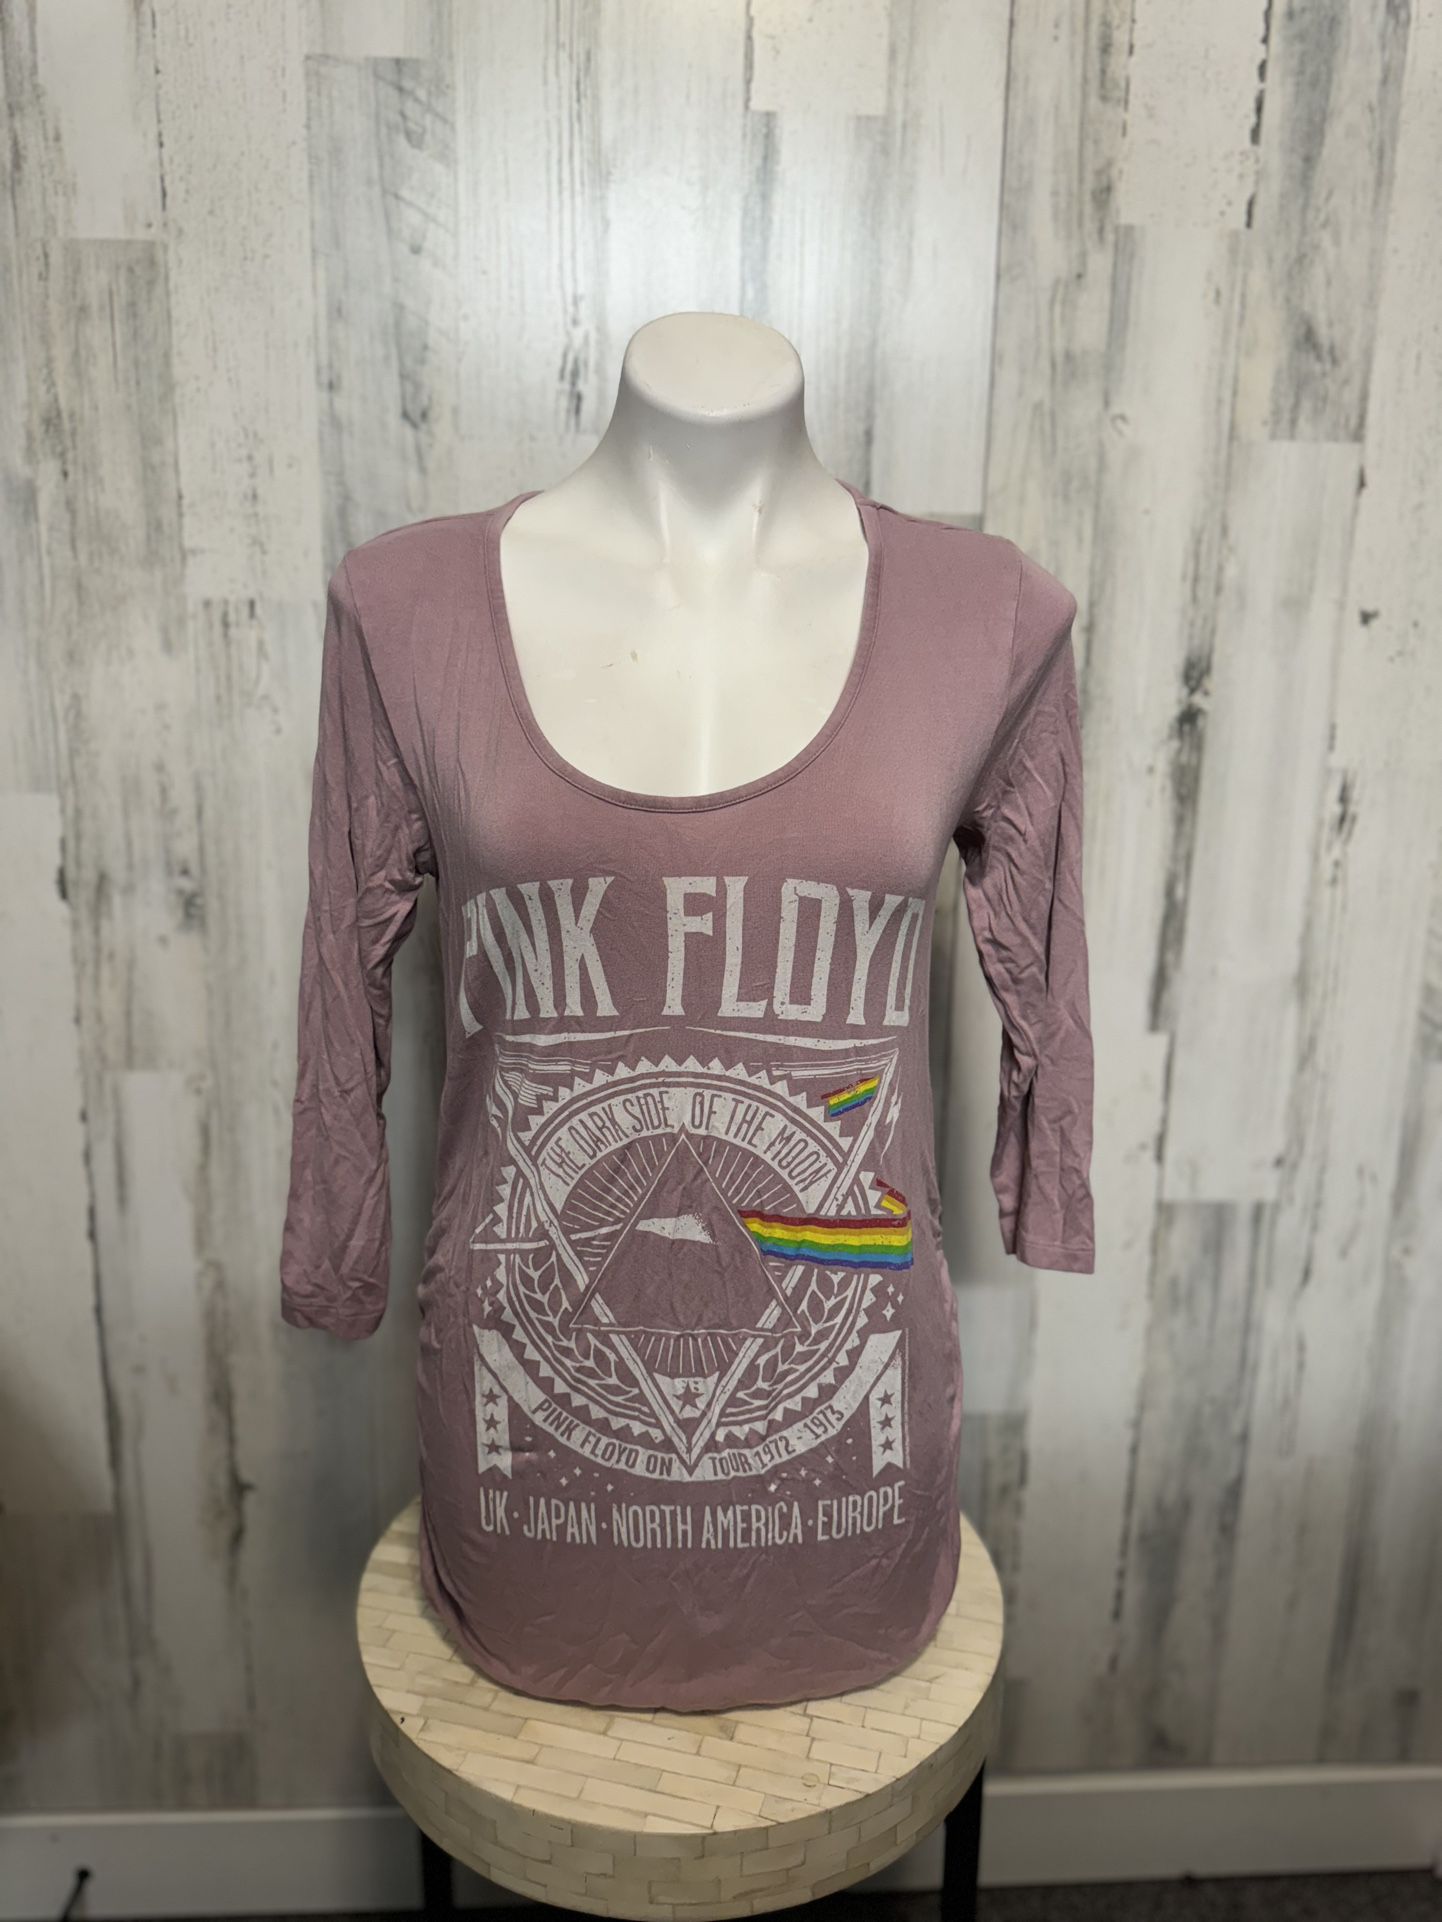 Pink Floyd’s Shirt 